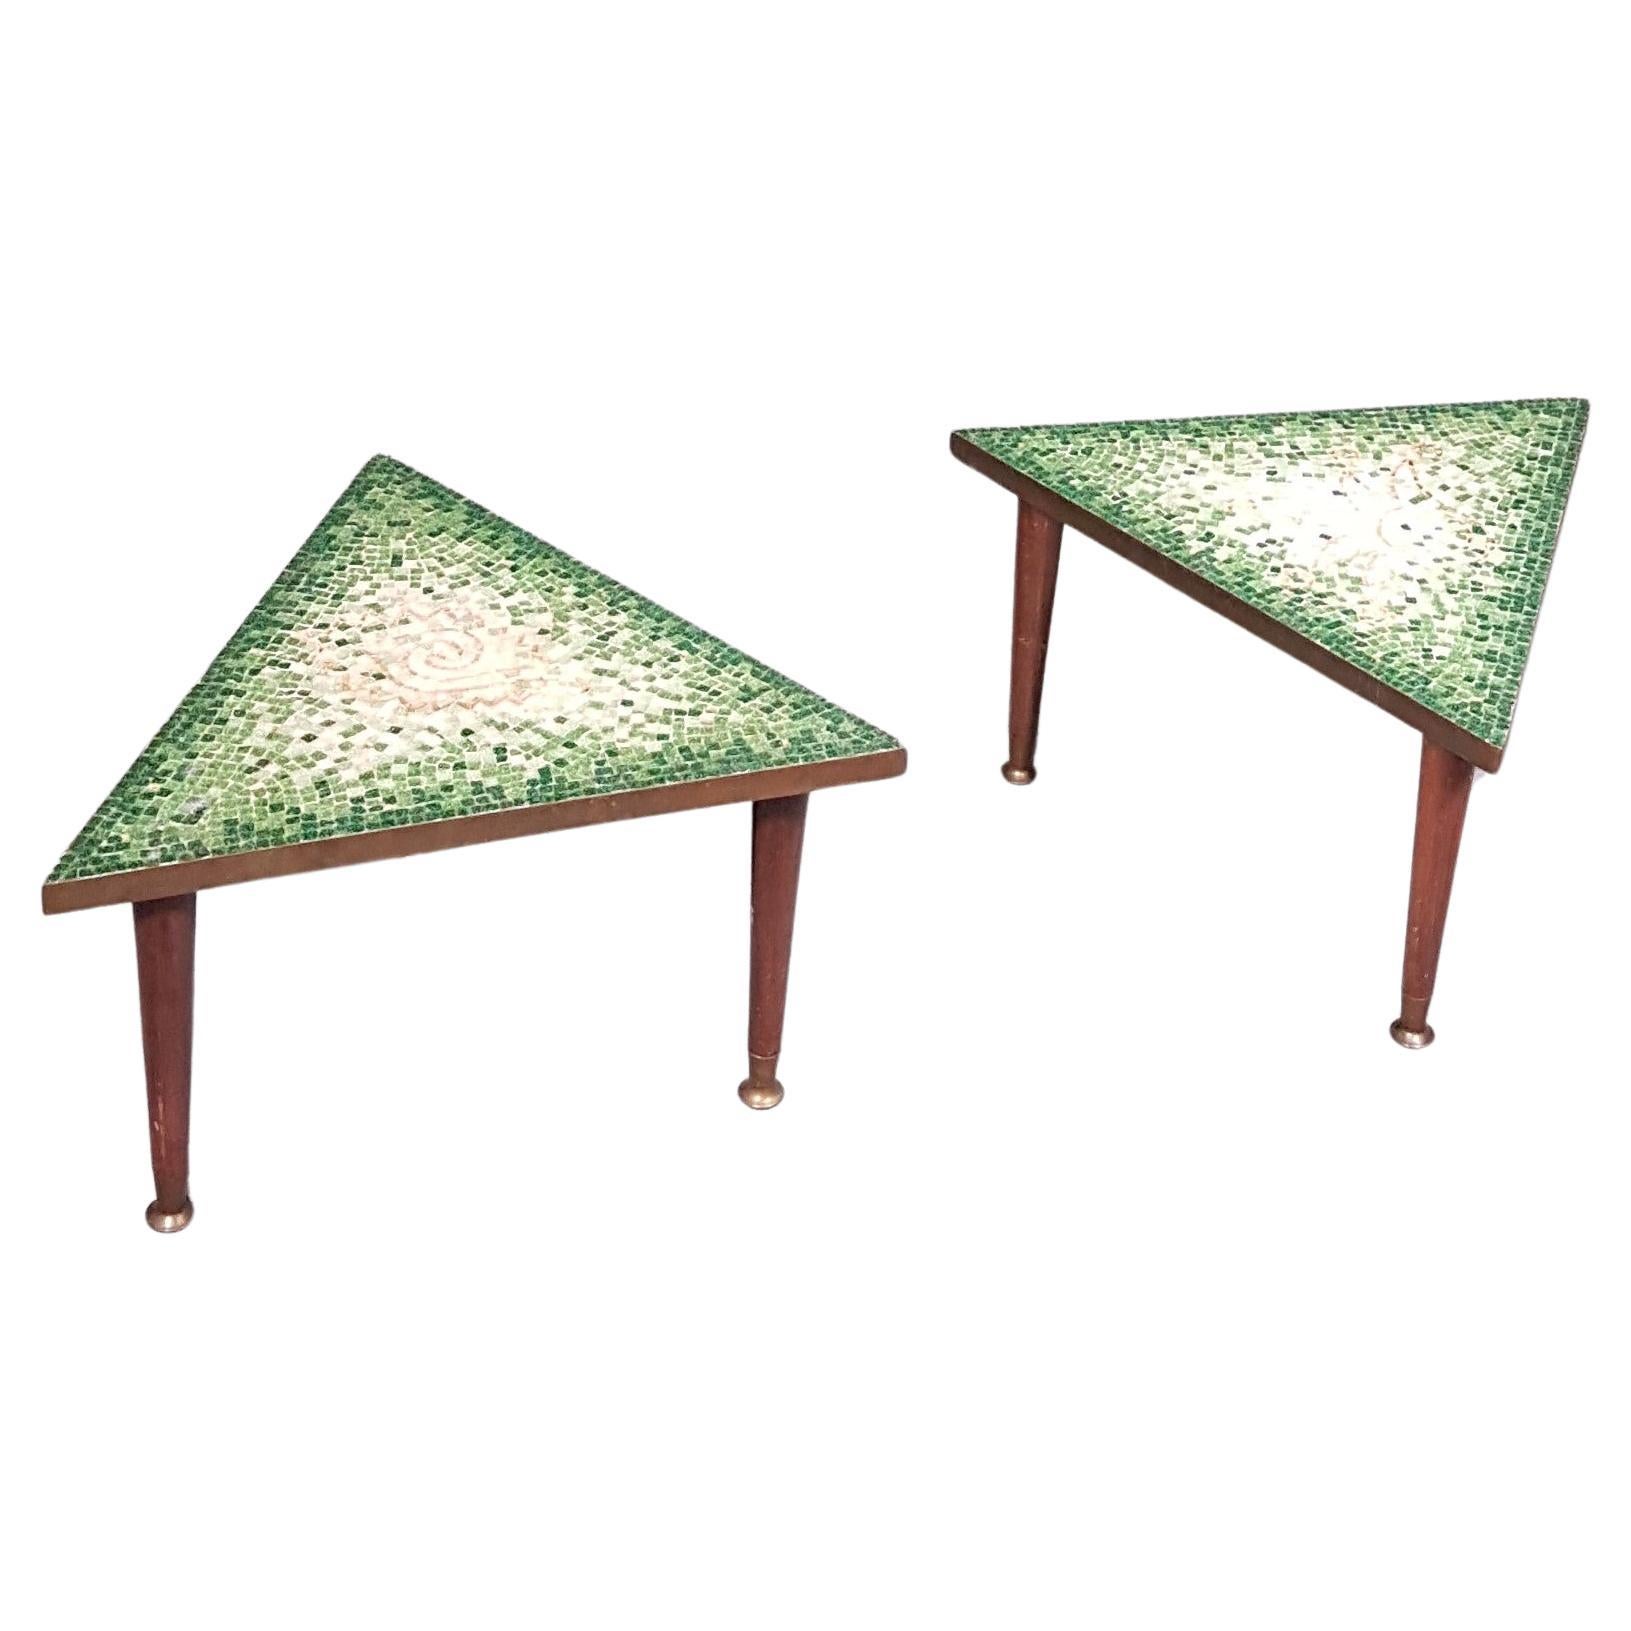 Pair of glass tile mosaic side tables - Genaro Alvarez - 1950s BY GETANO